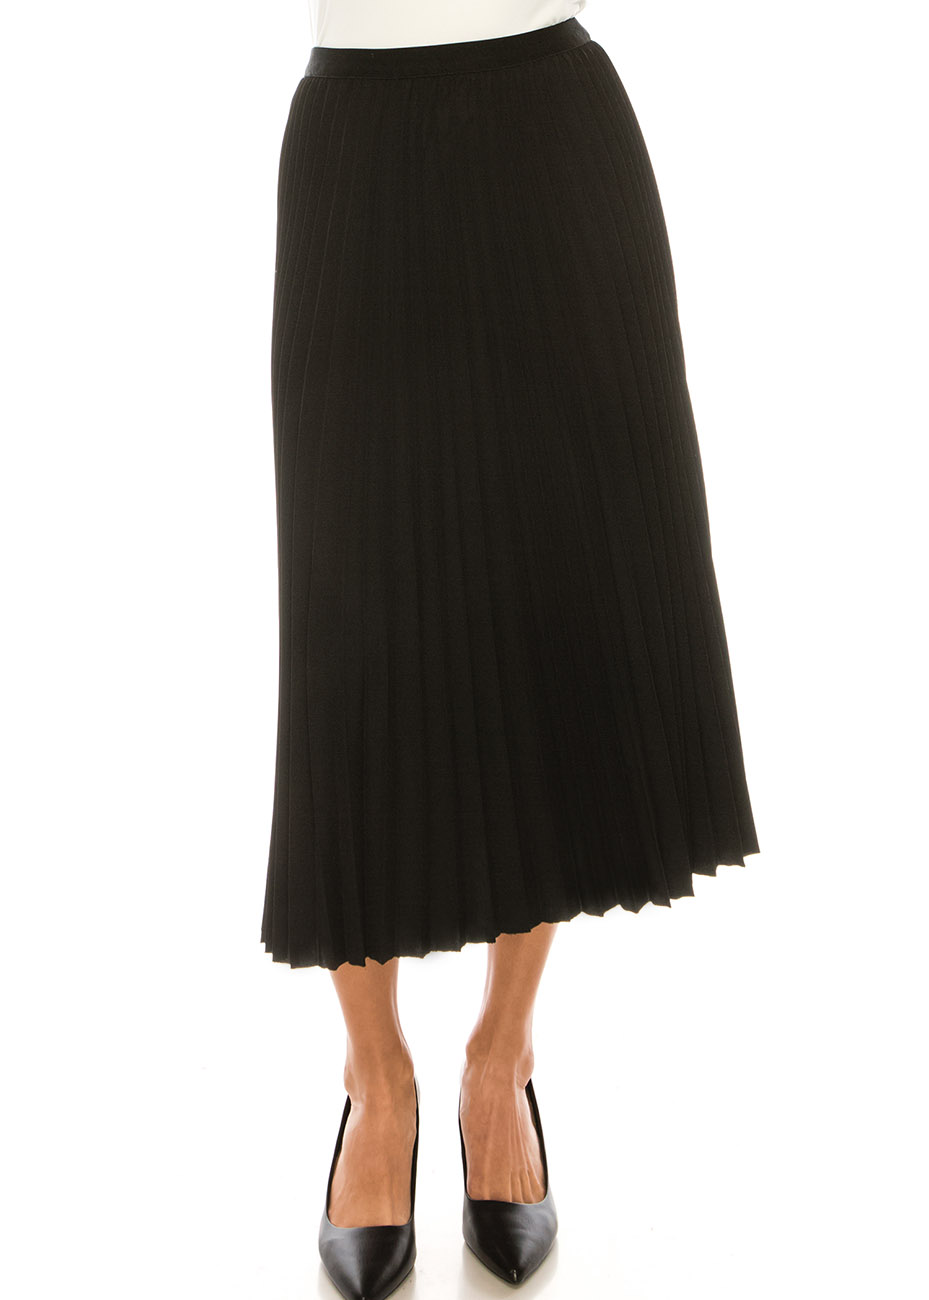 Classic Pleated Black Skirt